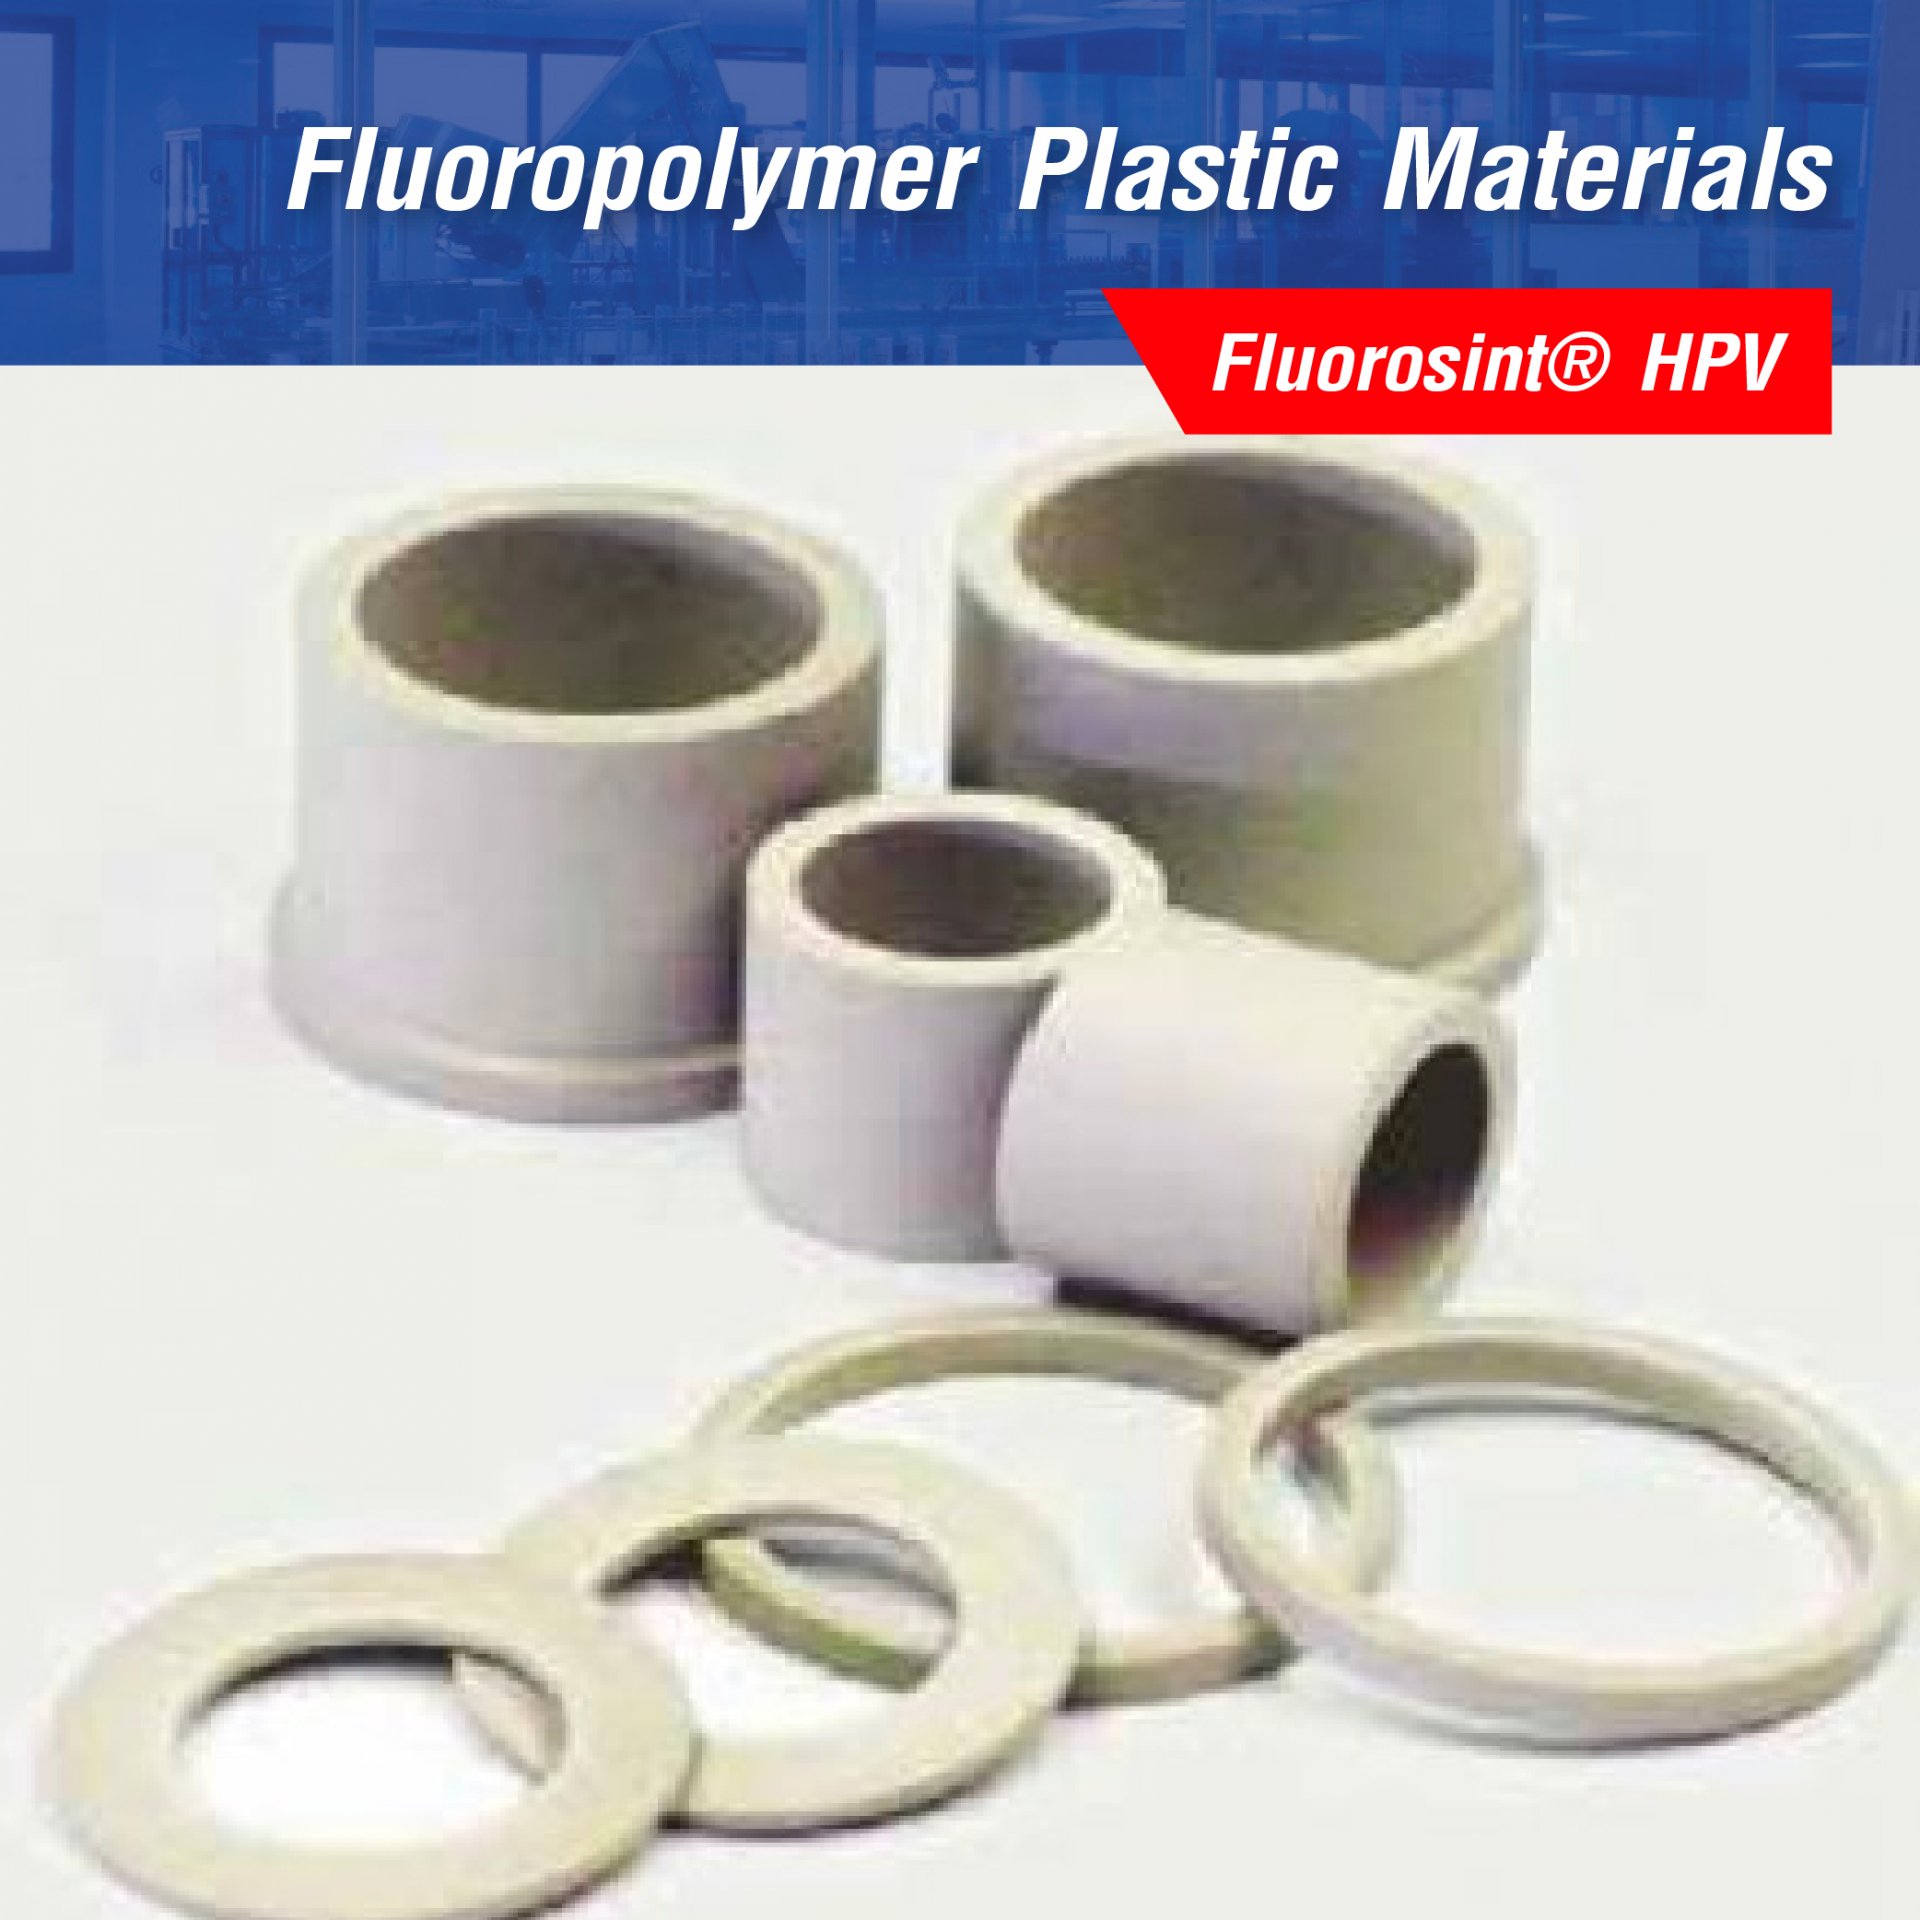 Fluoropolymer Plastic Materials